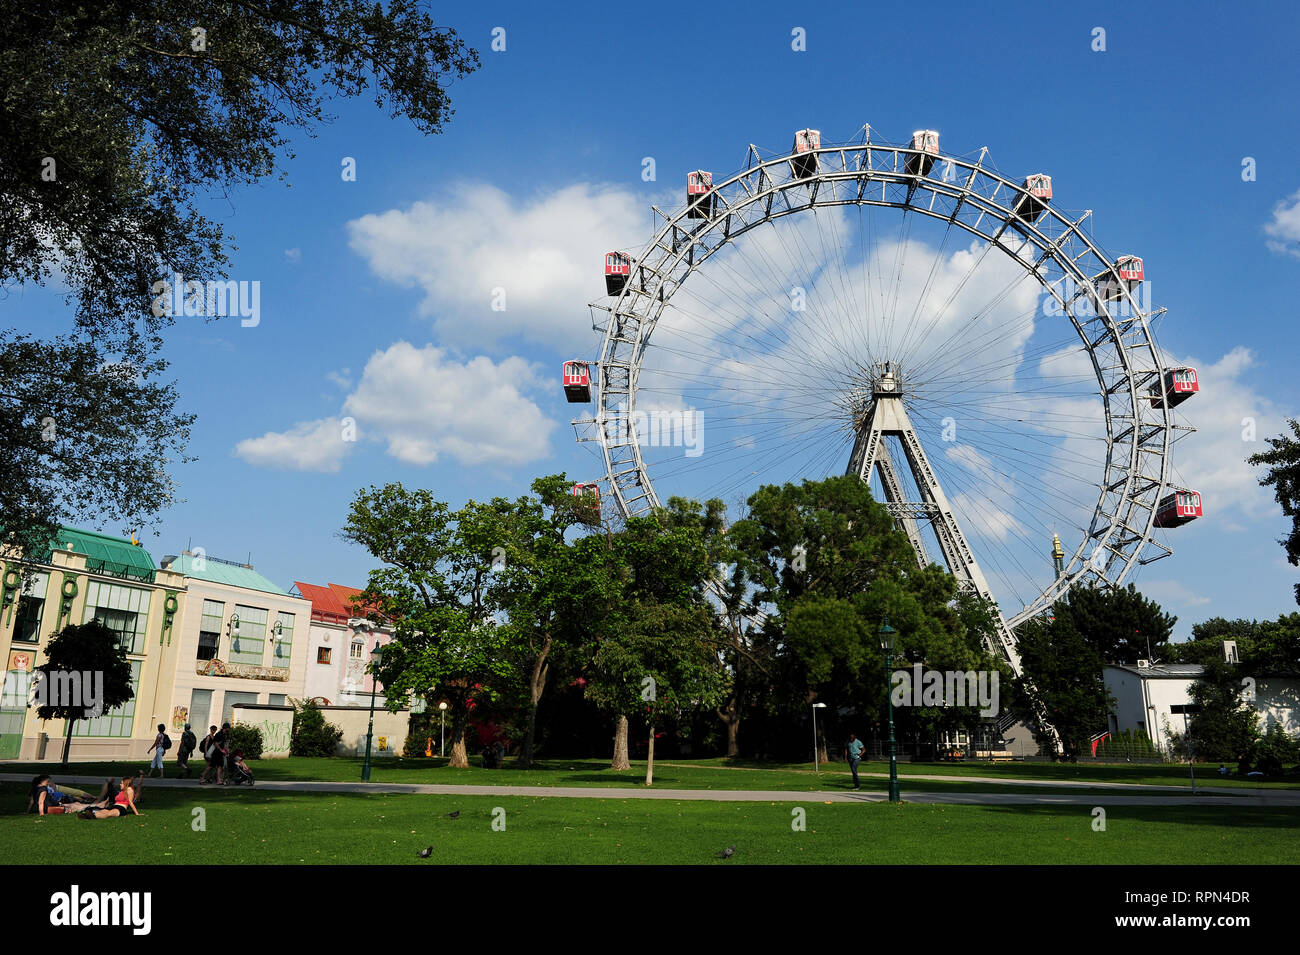 The Prater amusement park big wheel Reisenrad in Vienna, Austria Stock Photo